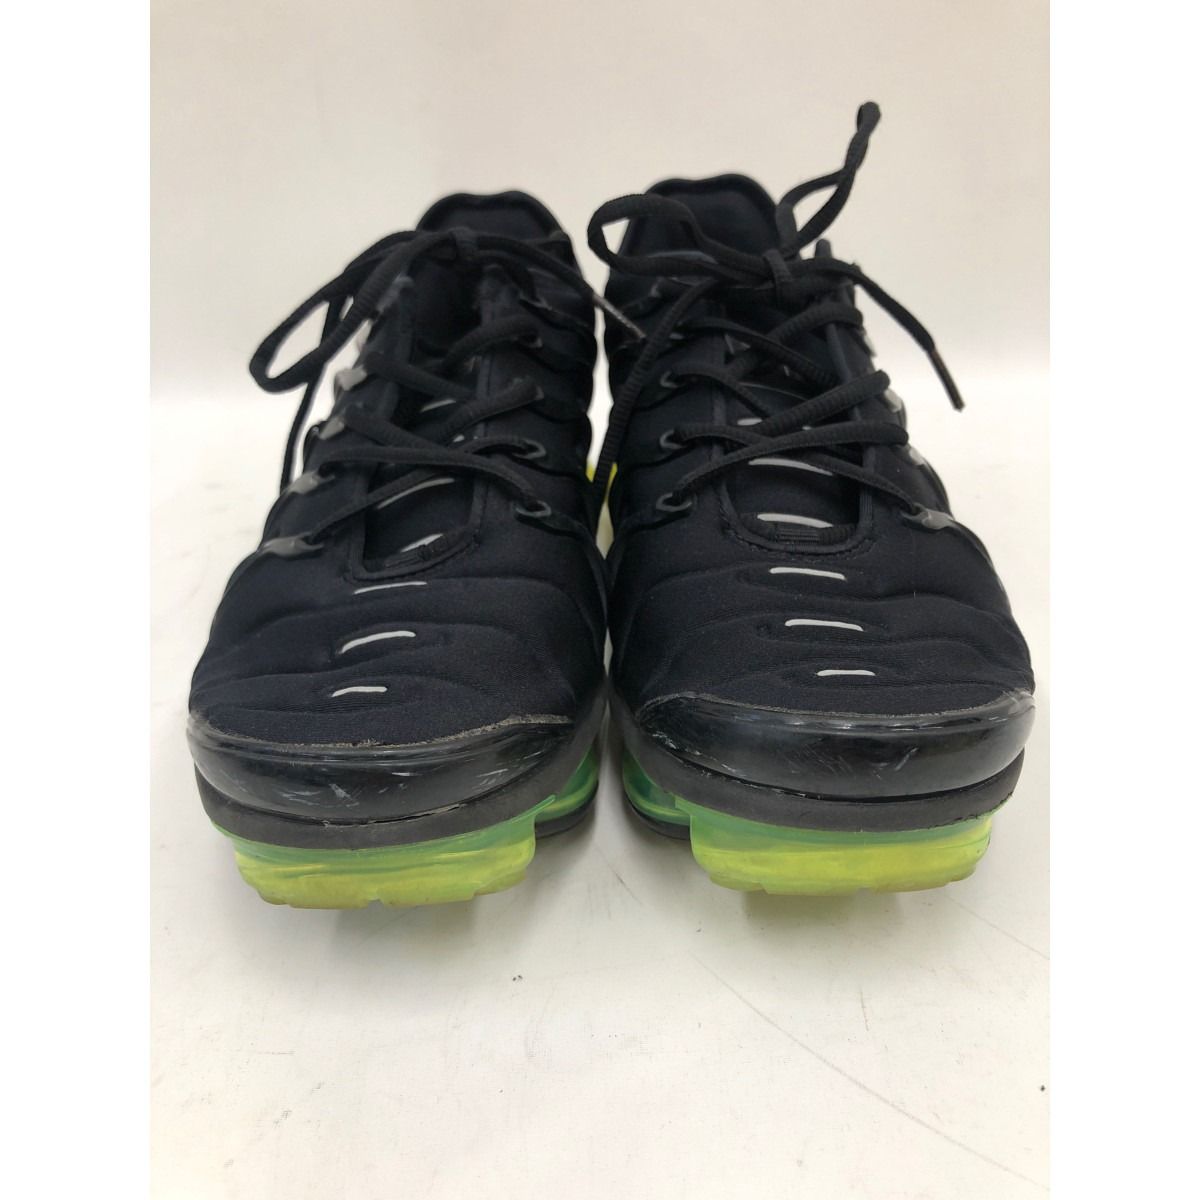 〇〇NIKE ナイキ 靴 AIR VAPORMAX PLUS 27.0cm  924453-015 ブラック×グリーン